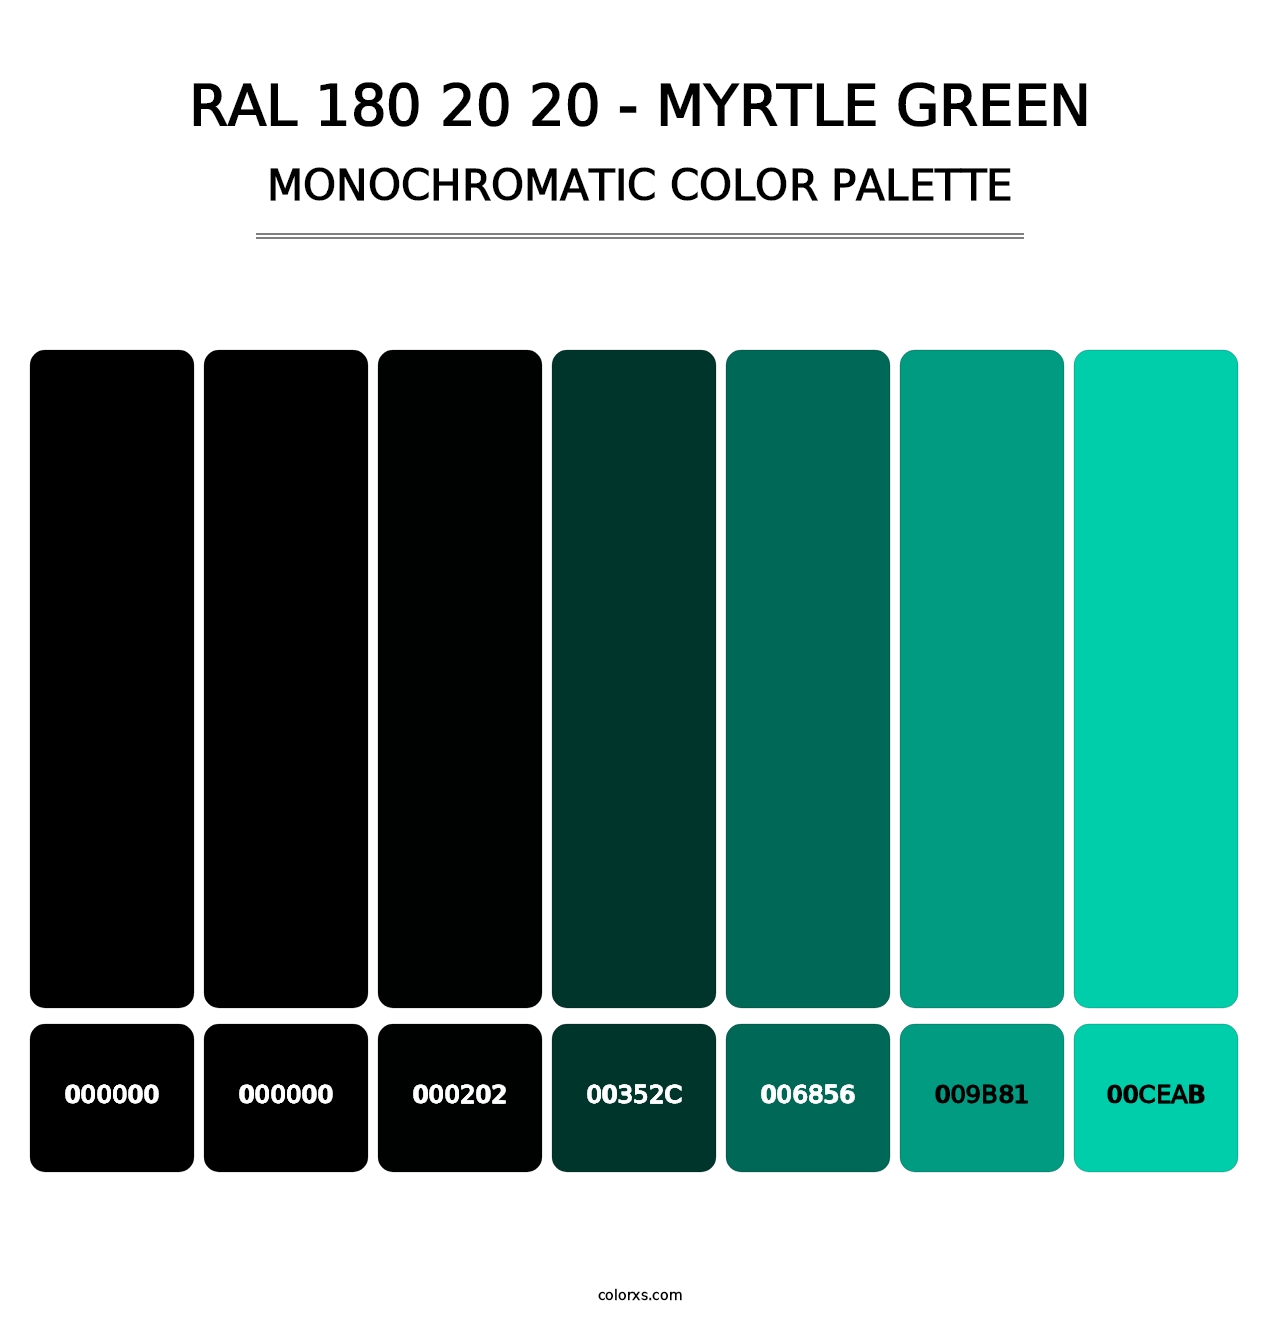 RAL 180 20 20 - Myrtle Green - Monochromatic Color Palette